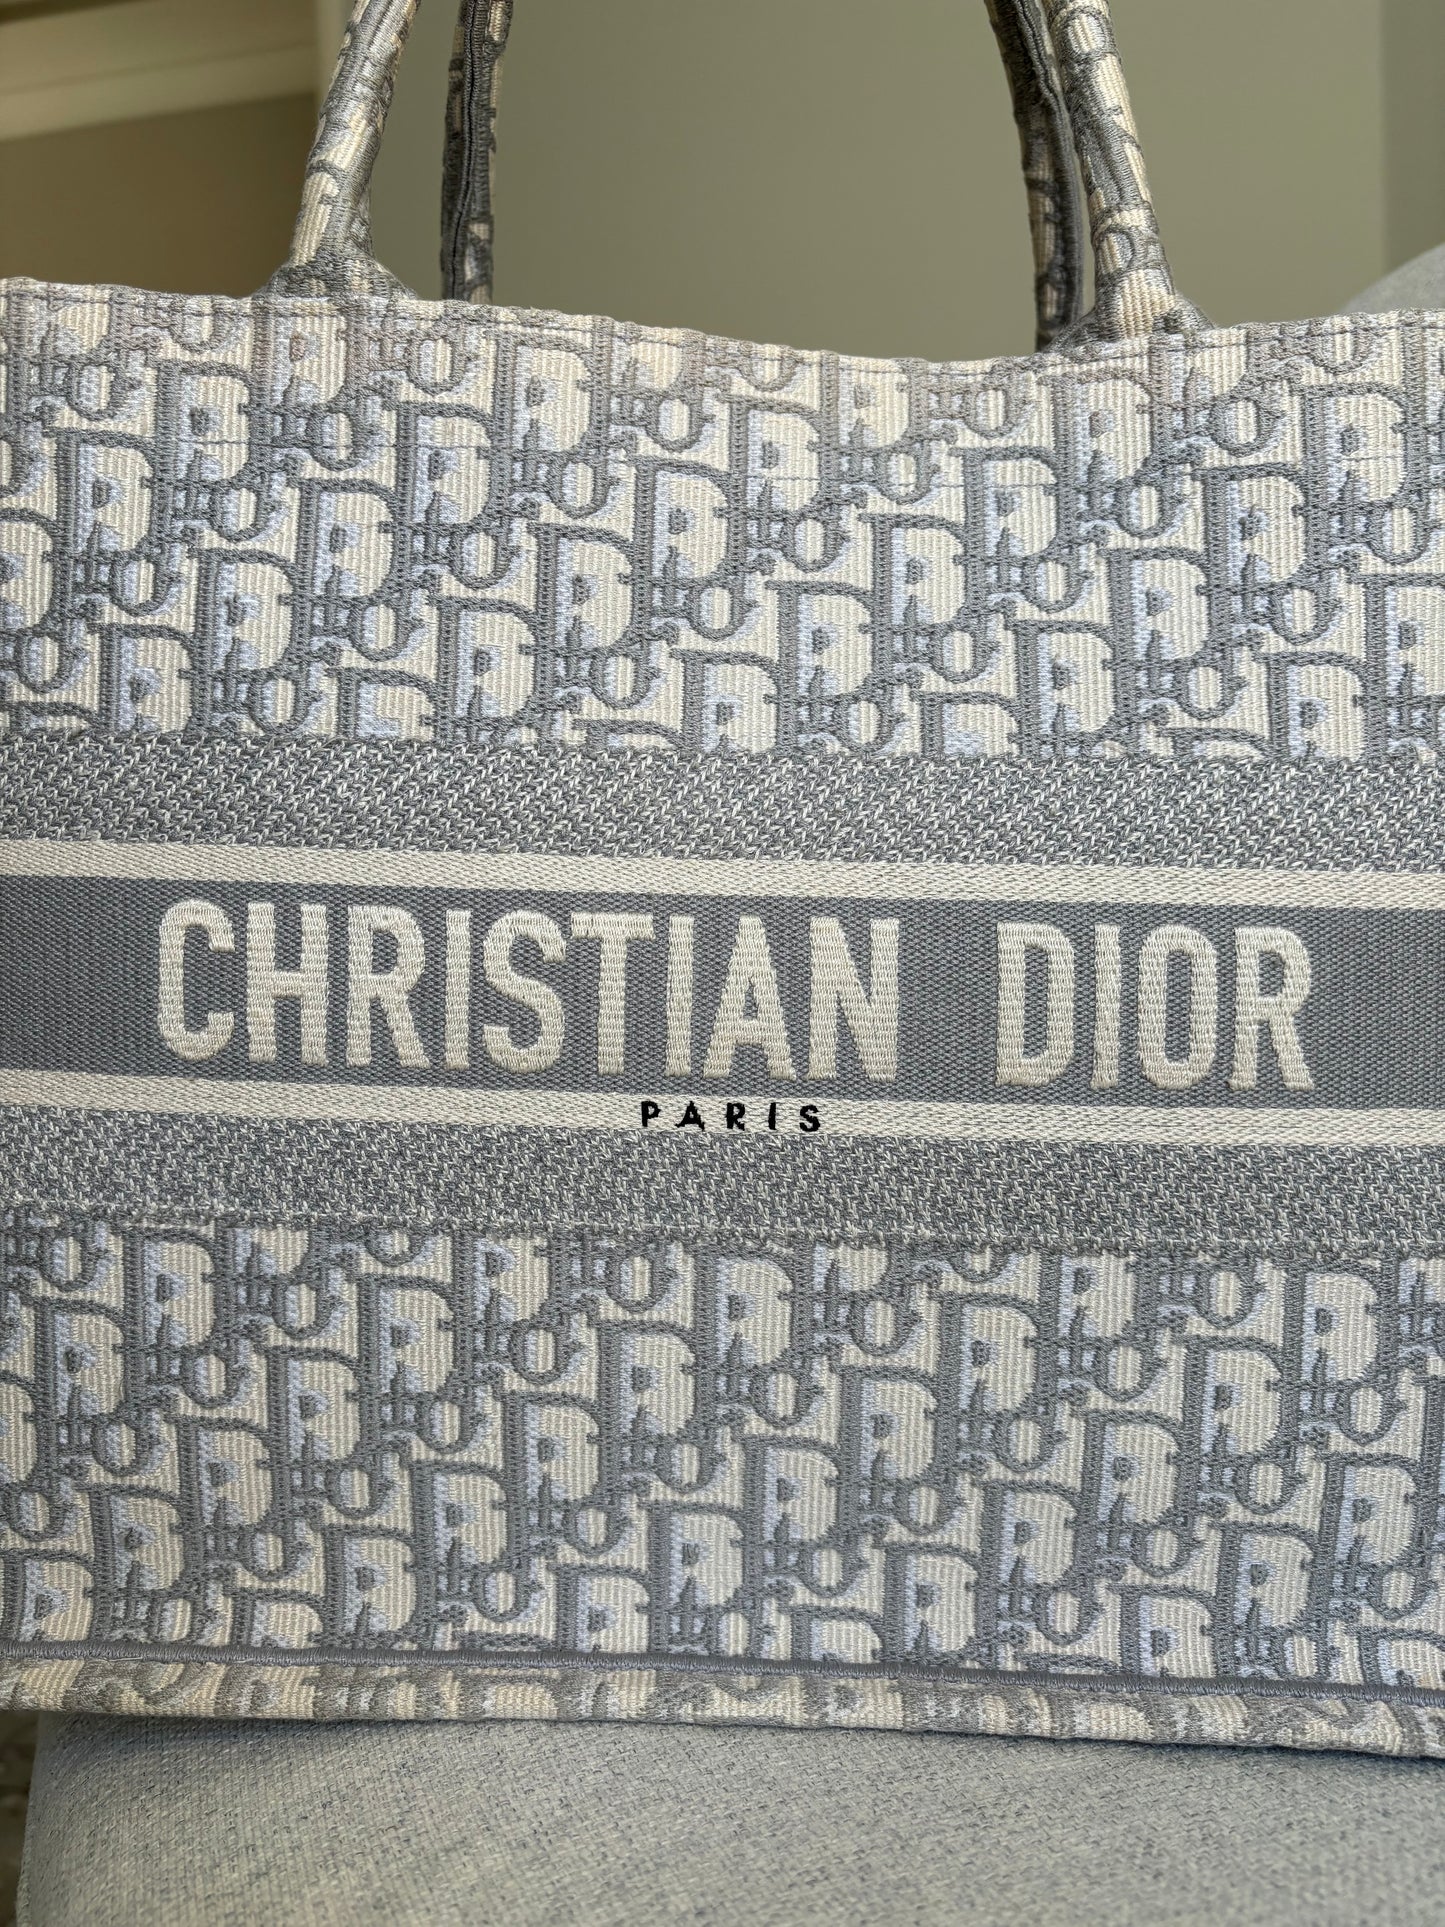 Christian Dior Medium Book Tote in Gradient Oblique Gray Ecru Trim (Limited Edition)